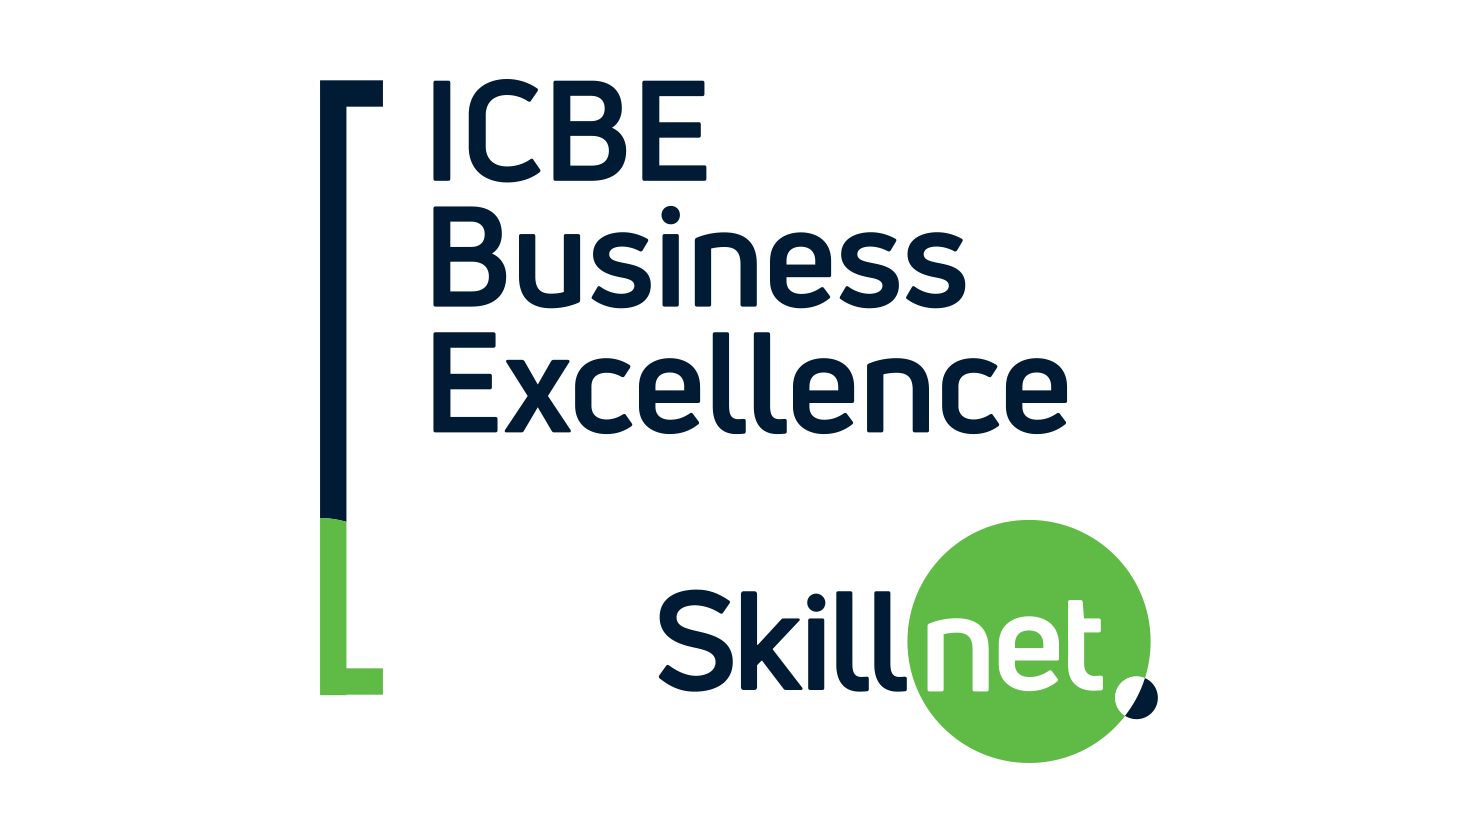 ICBE Business Excellence Skillnet